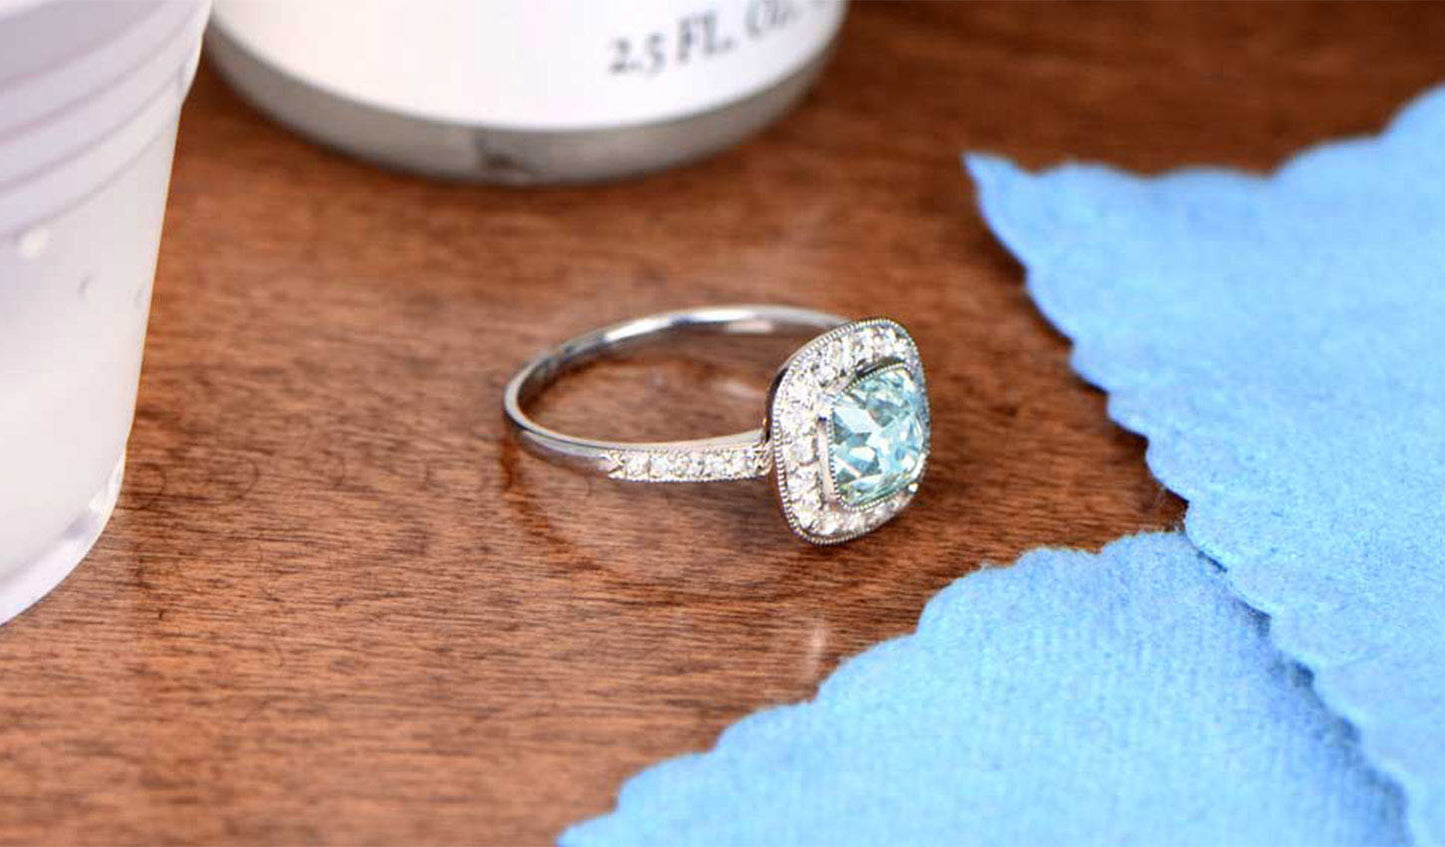 Buy Aquamarine and Diamond Ring, Emerald Cut Aquamarine Engagement Ring,  14K White Gold Genuine Aquamarine Ring Wedding Ring Promise Ring Online in  India - Etsy